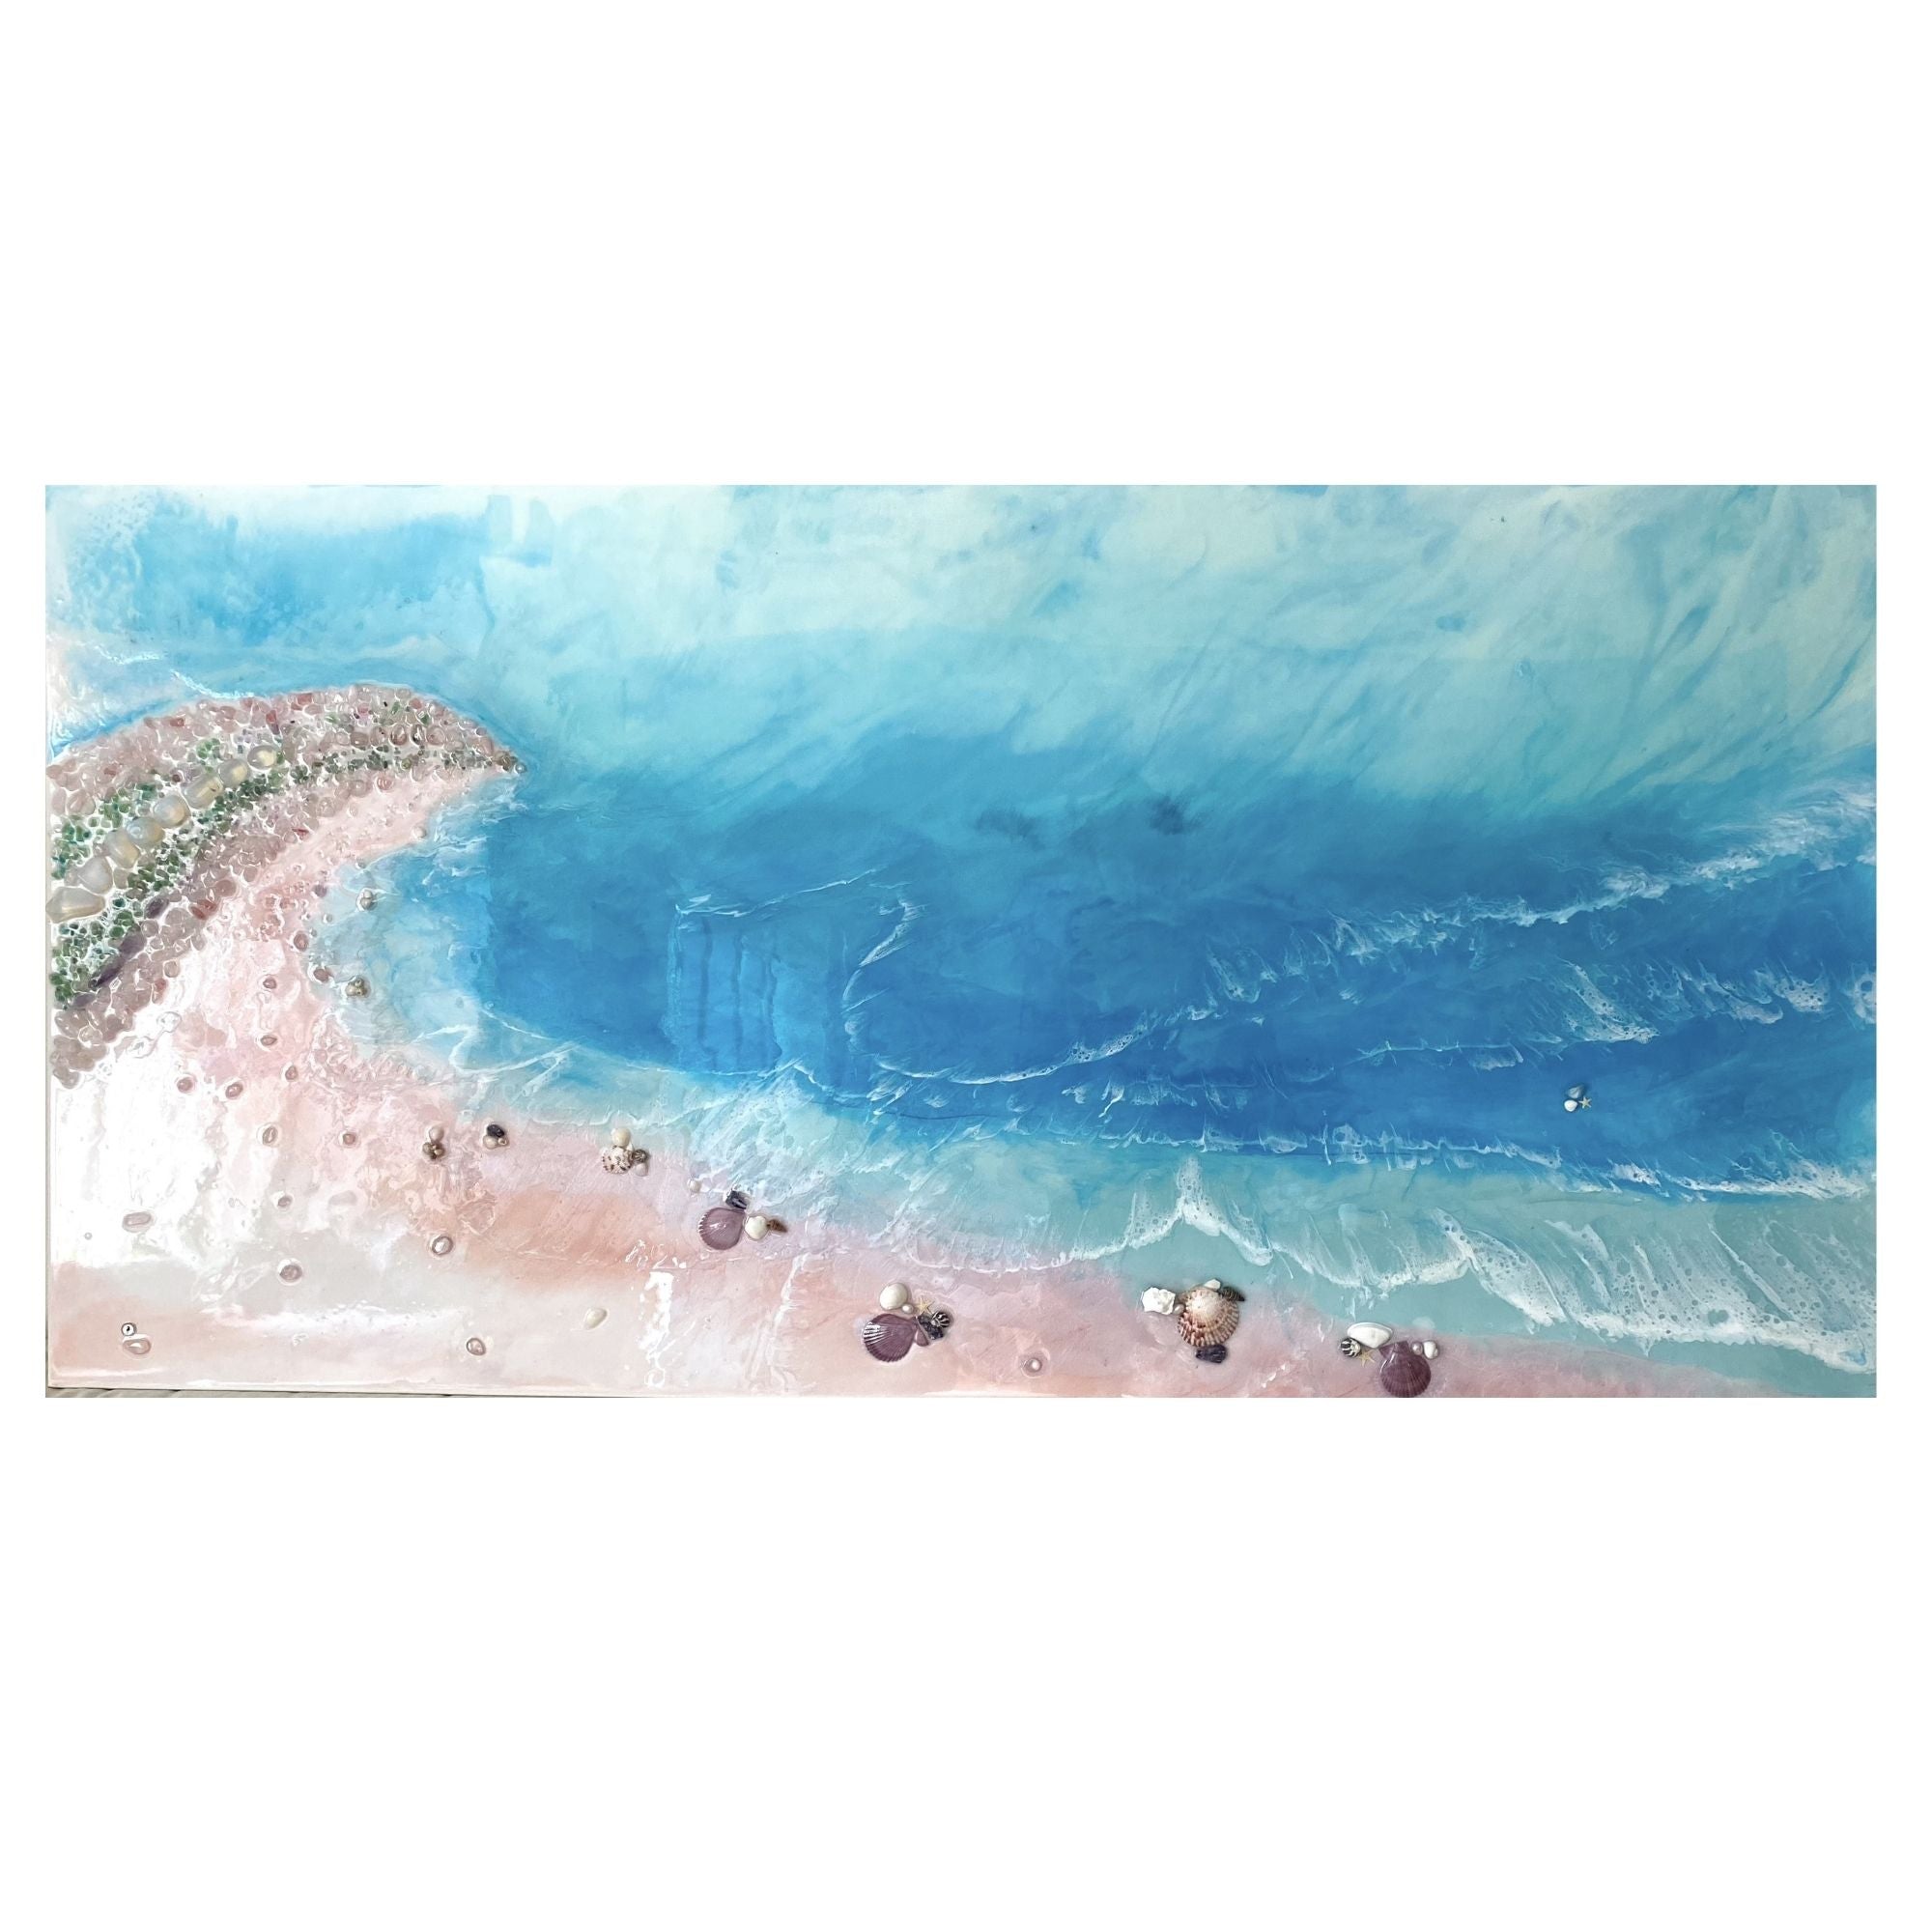 BOUNTY DREAM Bounty Dream Whitsundays - Whitehaven Beach - Heart Reef - Great Barrier Reef  Ocean  blue with roze quartz crystals